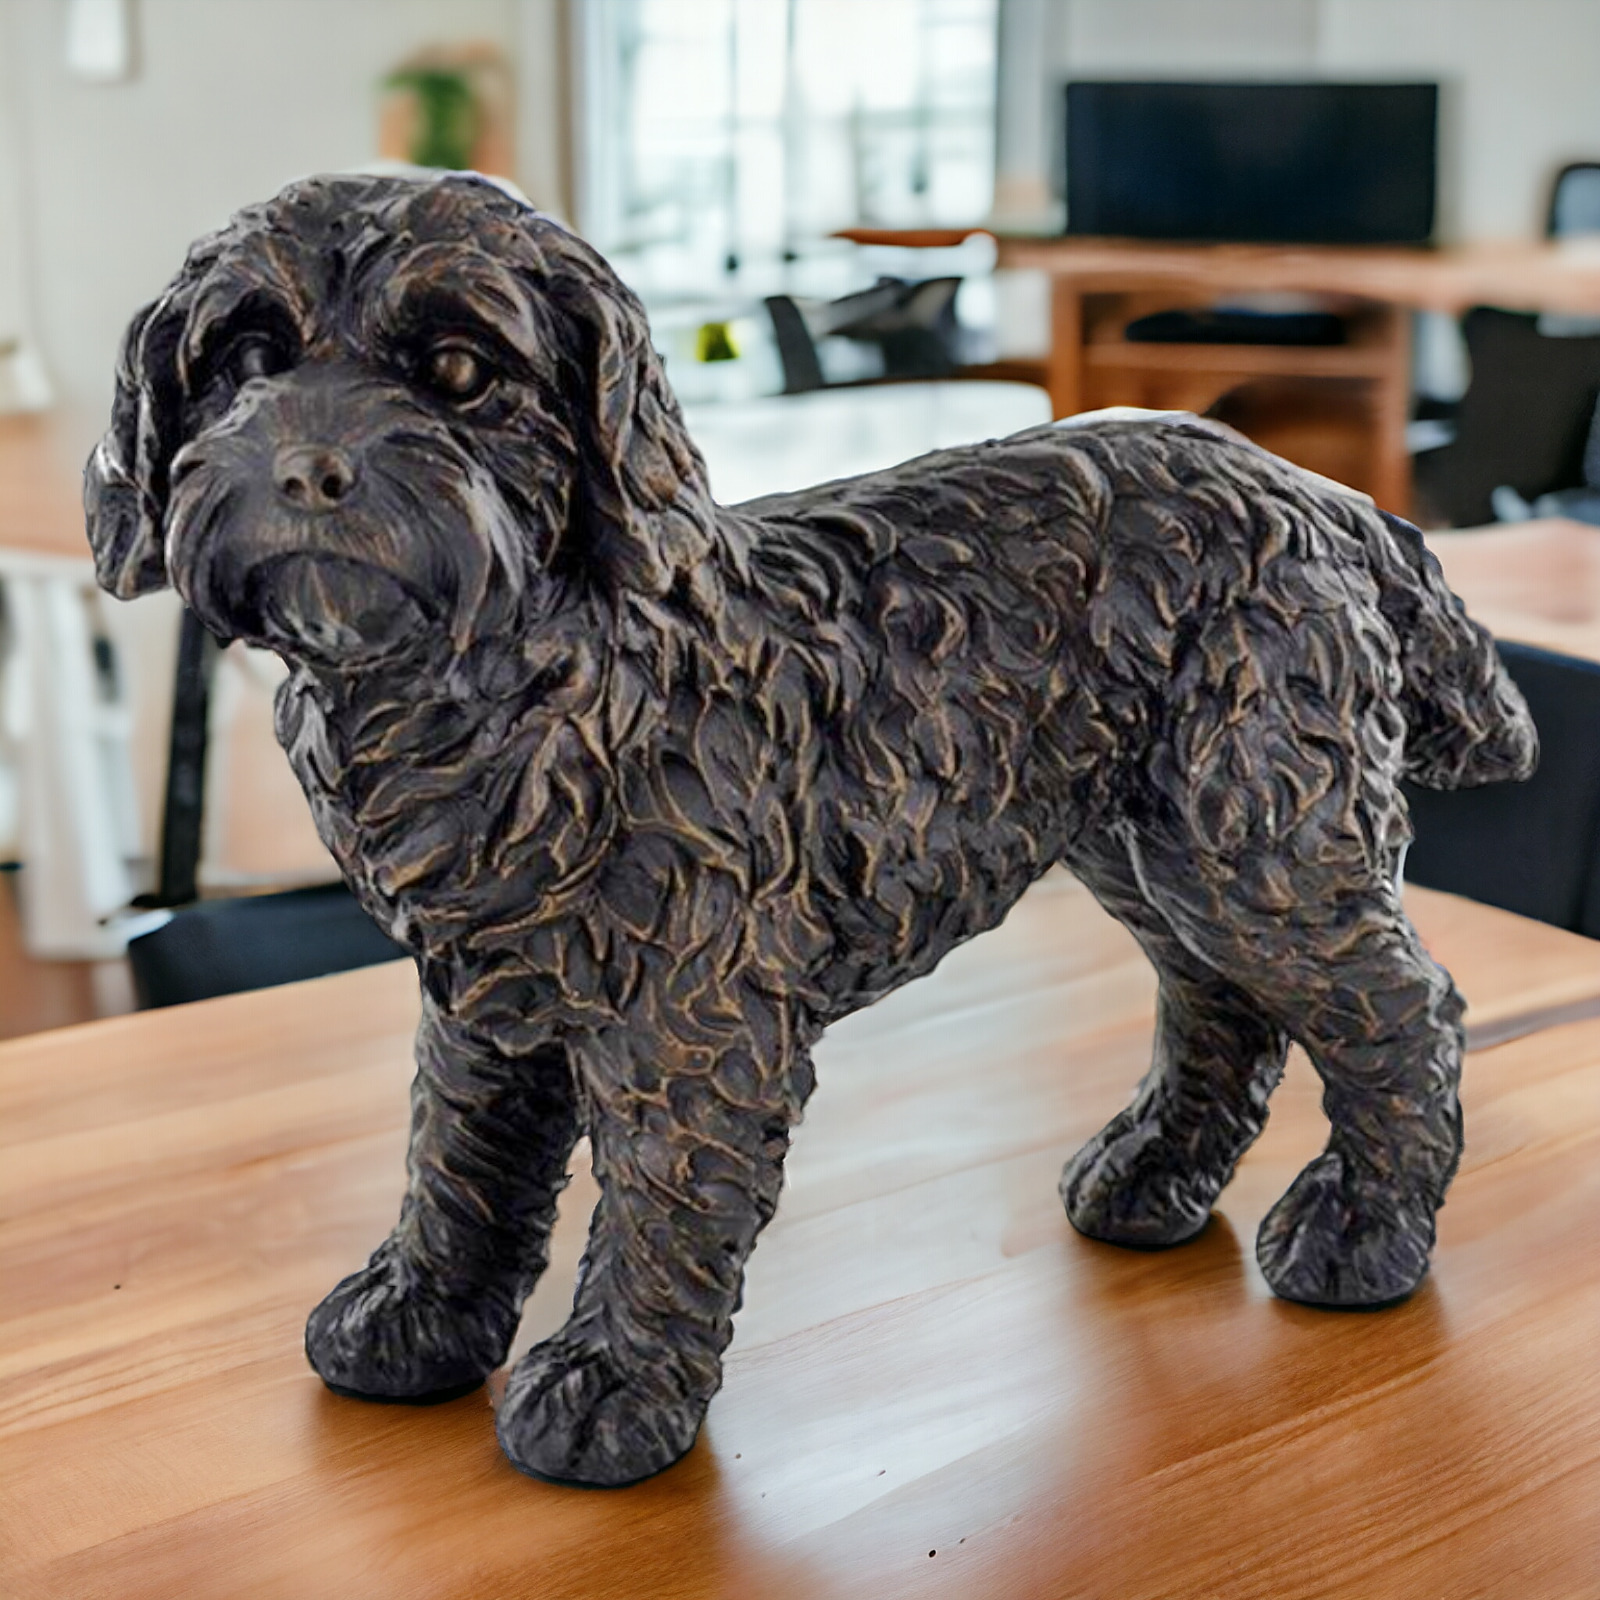 Lifelike Cocker Spaniel Statue Exquisite Dog Sculpture Realistic Canine Figurine